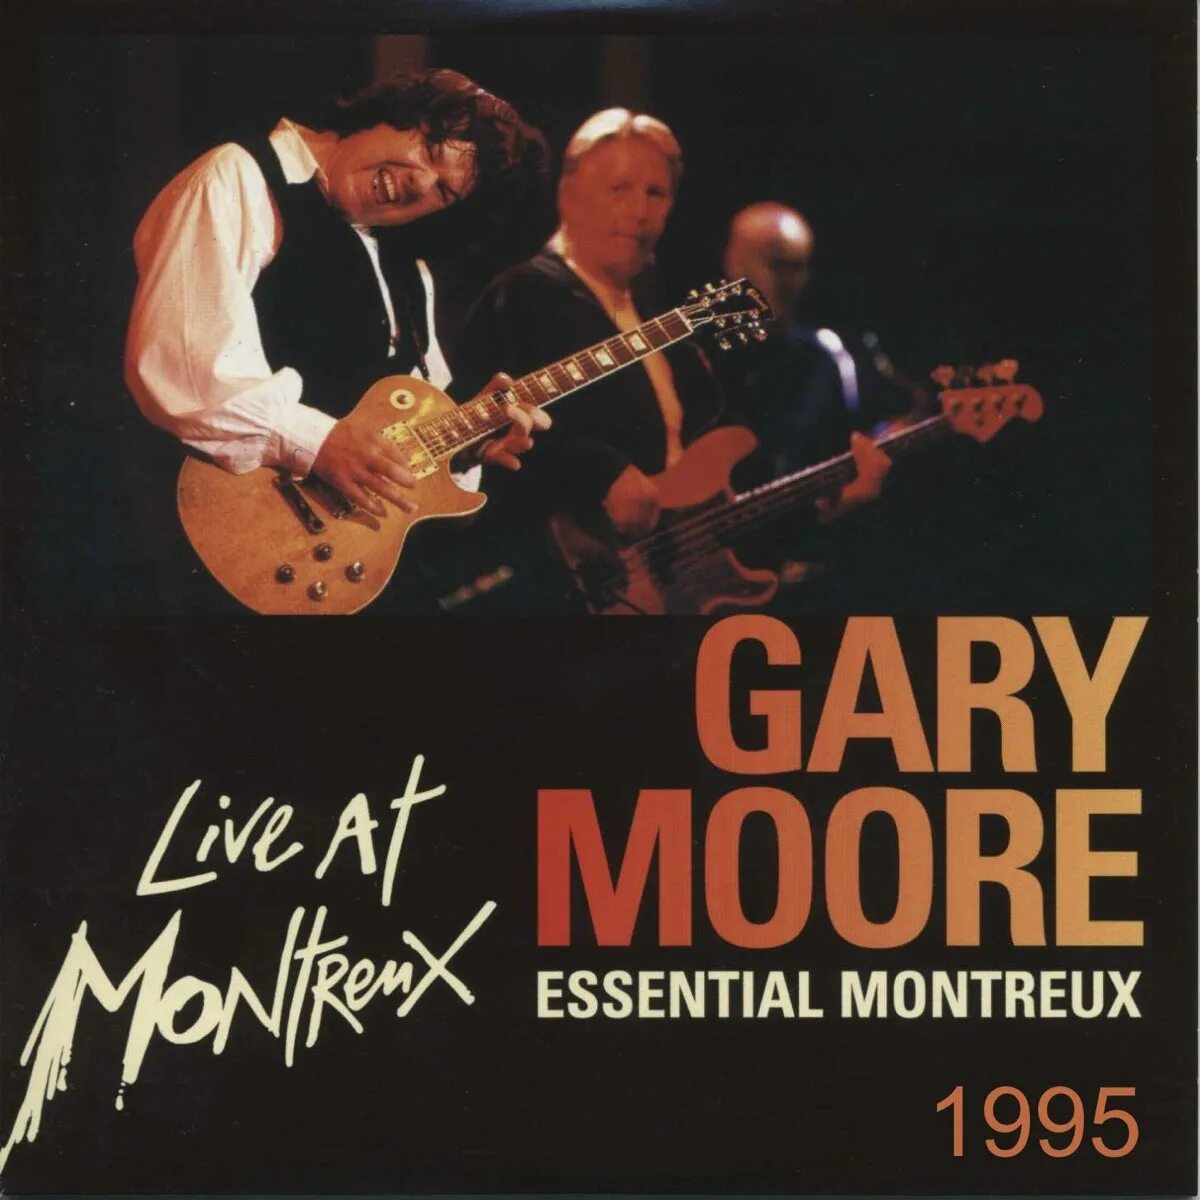 Essential Гэри Мур. Moore, Gary "Essential (CD)". Gary Moore дискография. Гари Мур альбом лайв 1978.